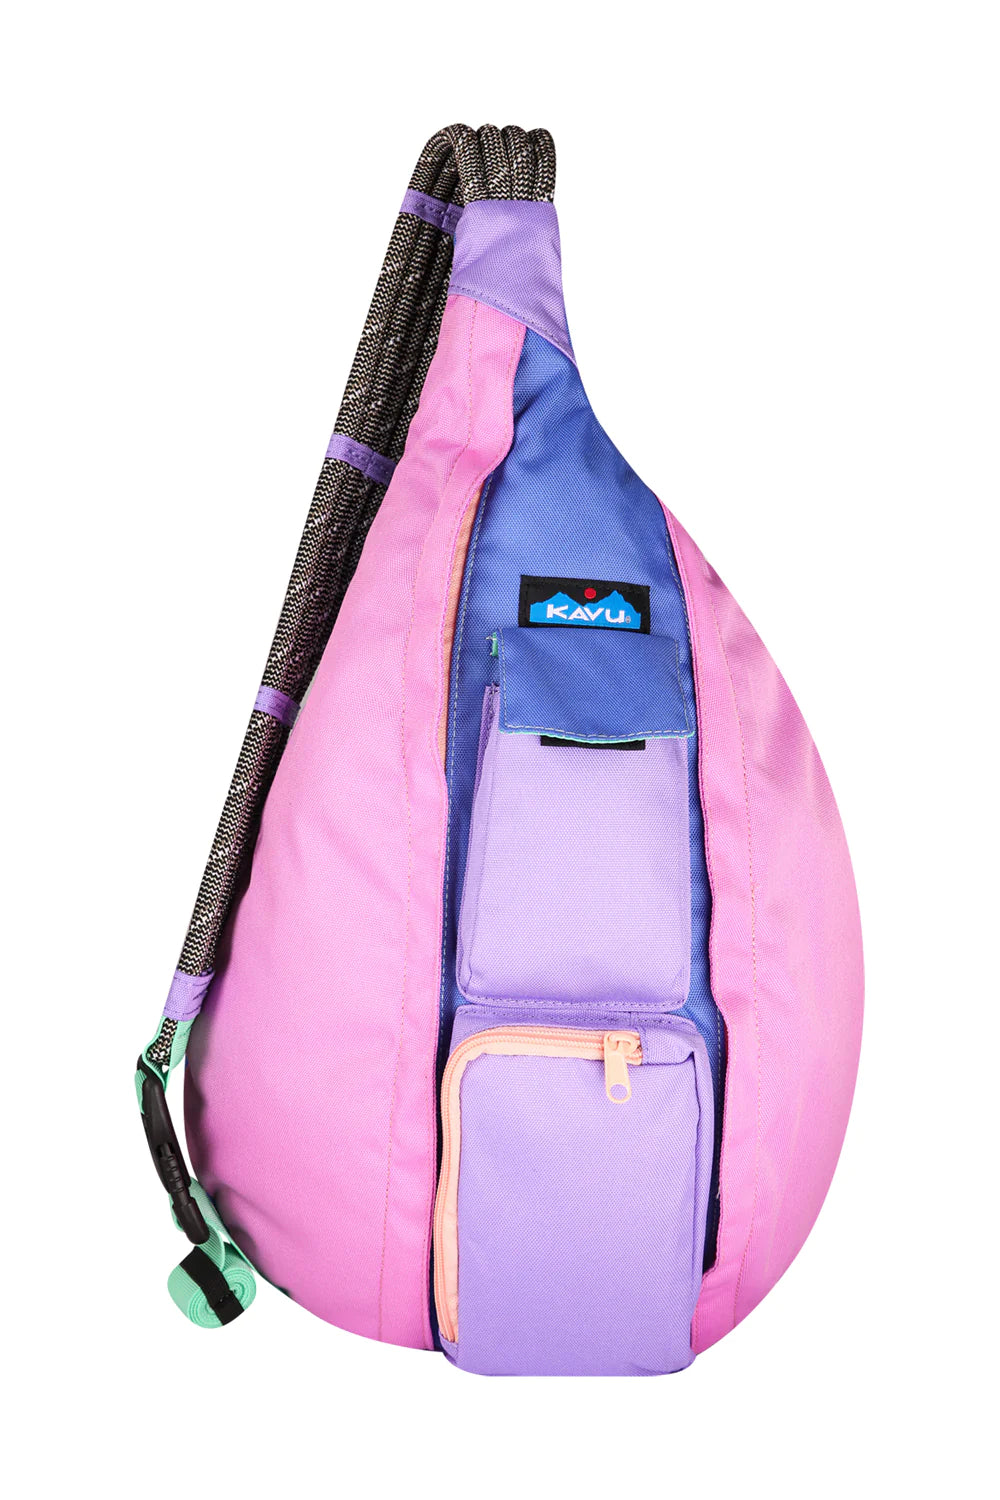 Kavu Sling Bag